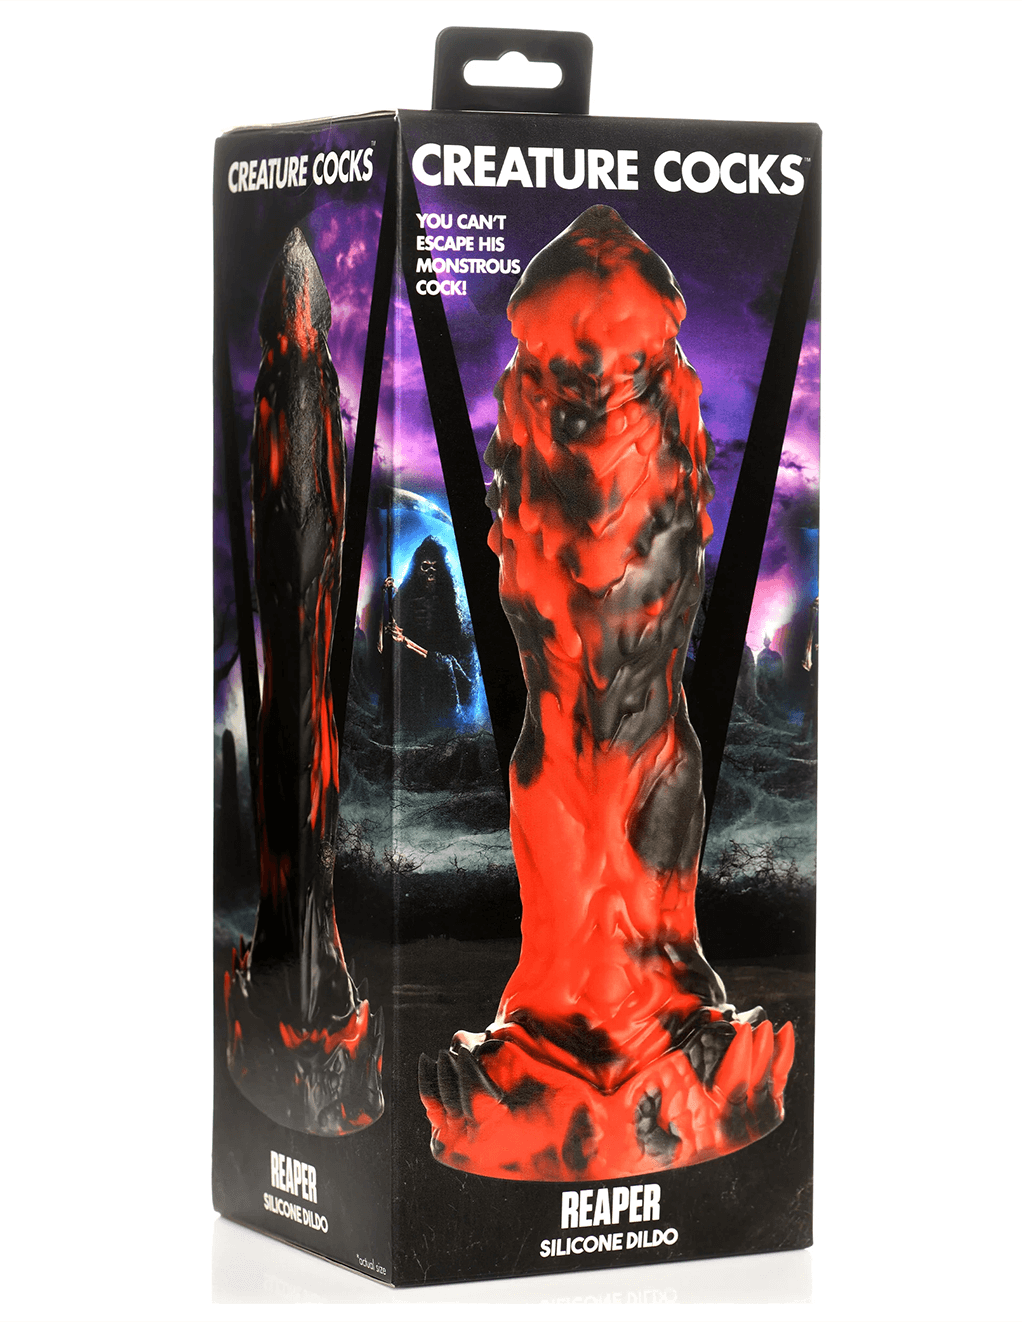 Creature Cocks Grim Reaper Dildo - Package